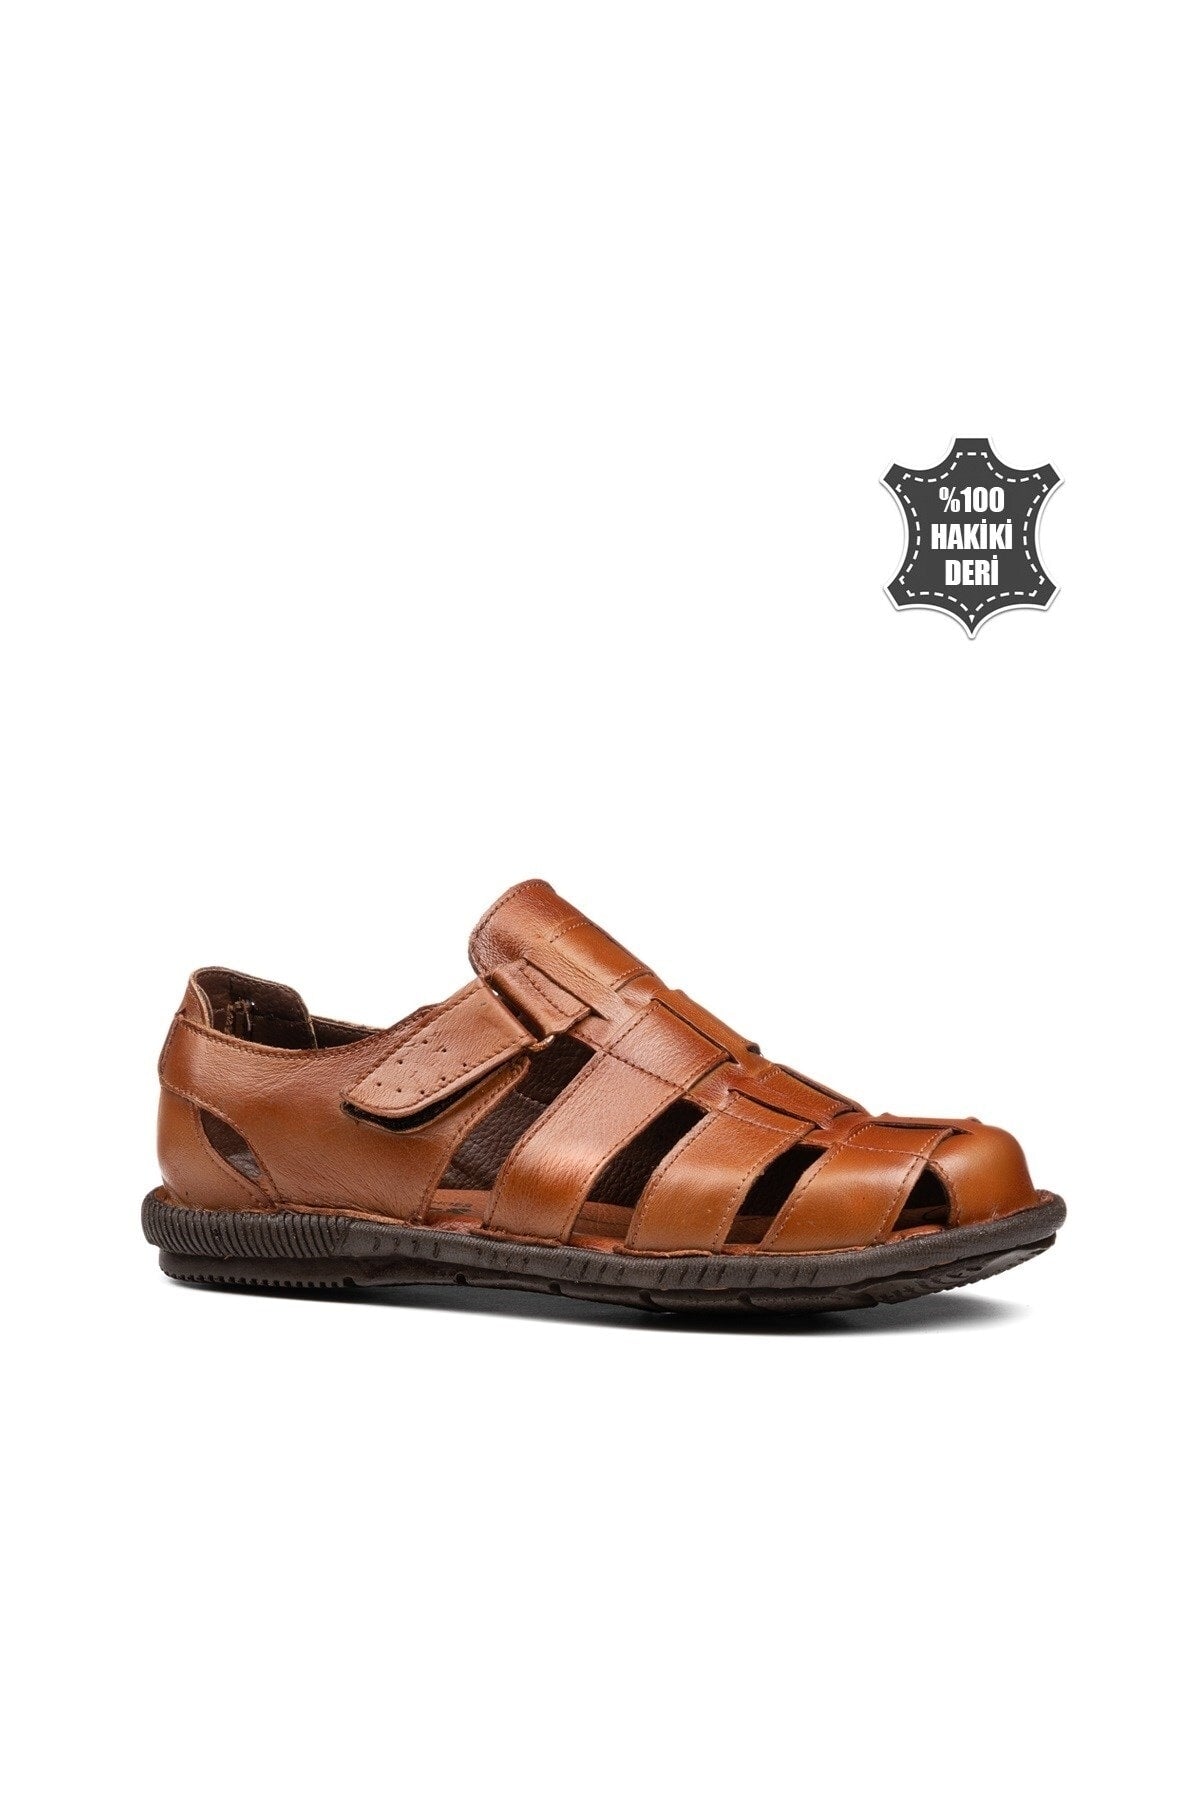 Genuine Leather Black - Taba Men's Sandals Shoes 108